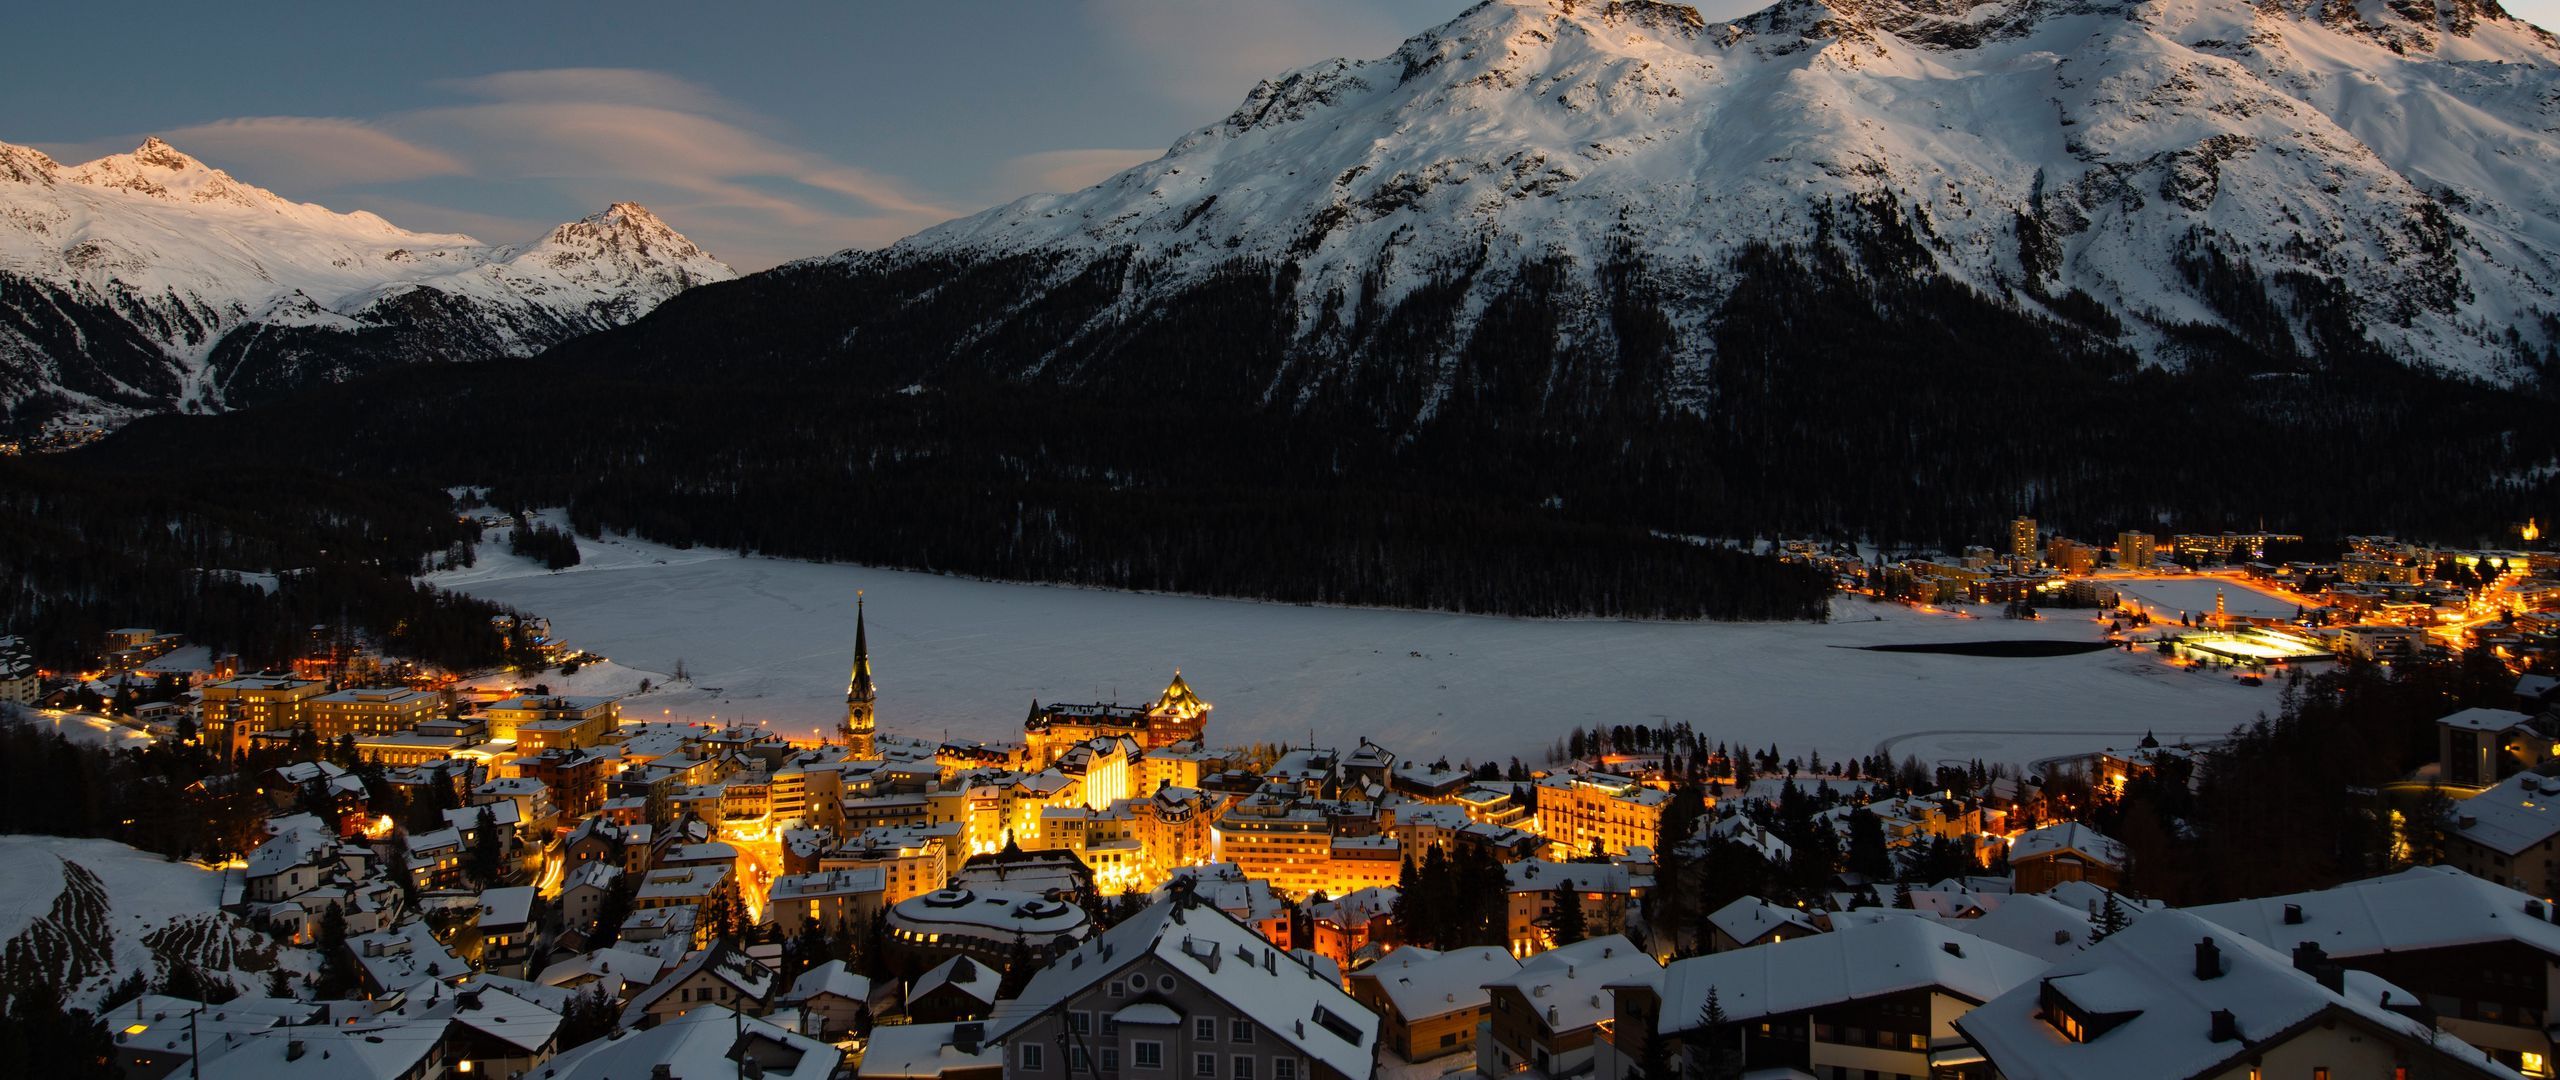 Download wallpaper 2560x1080 mountain, winter, village, snow, light, switzerland dual wide 1080p HD background